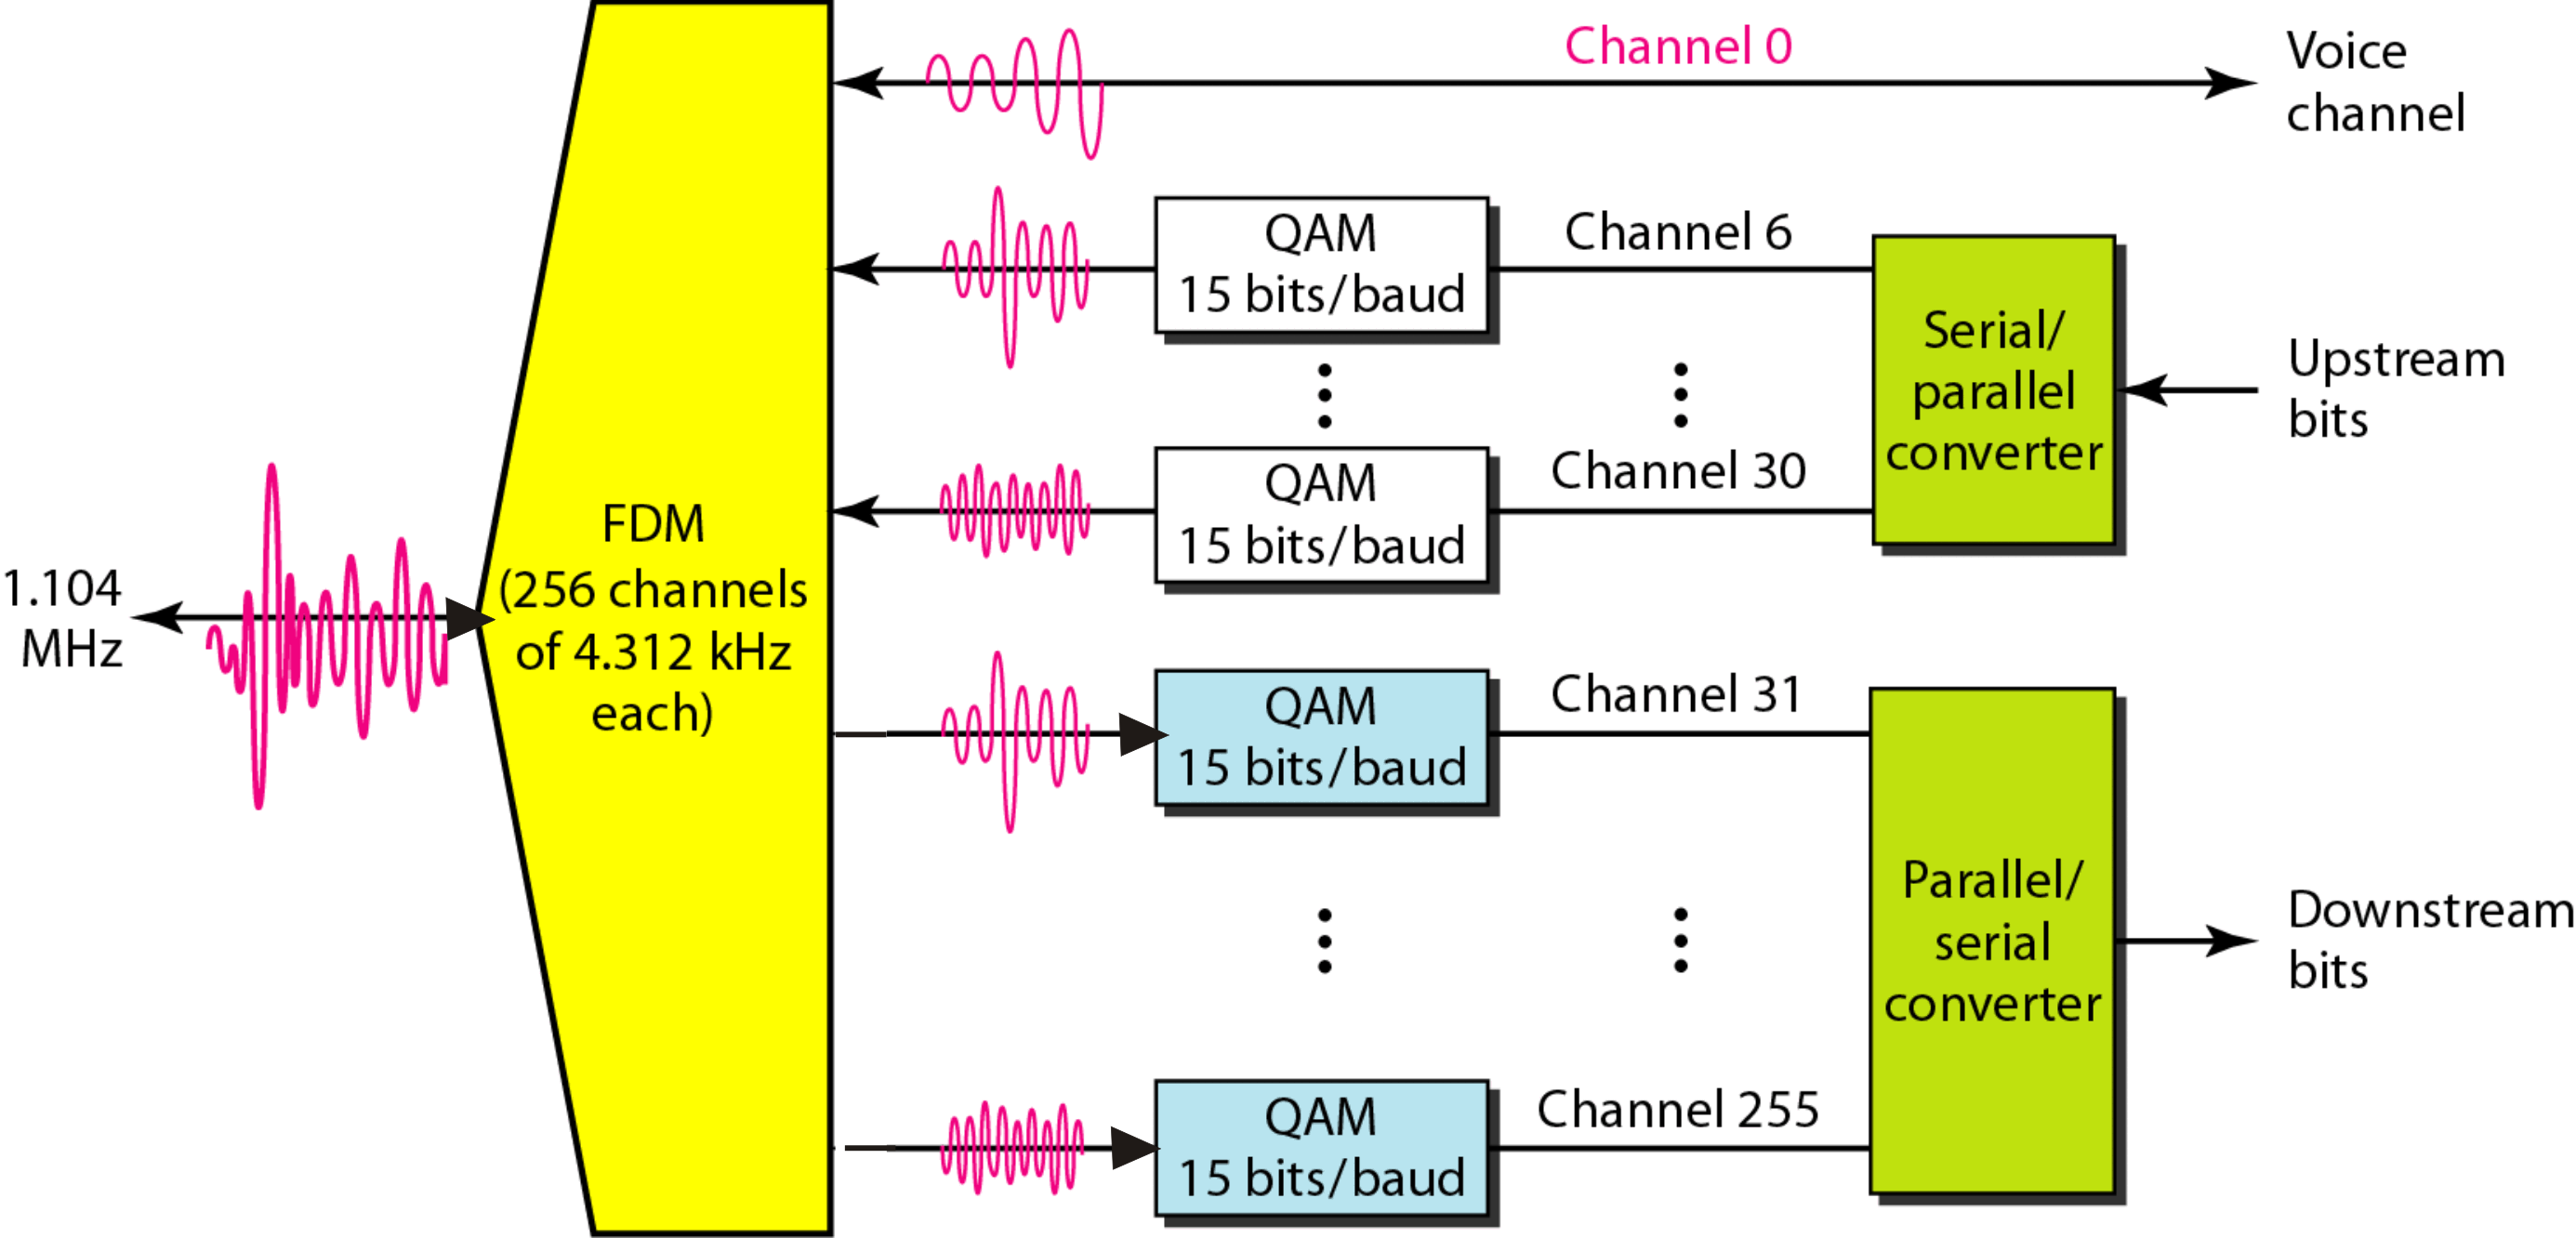 ADSL, Asymmetrical Digital Subscriber Line ADSL, Asymmetrical Digital Subscriber Line zbytek (do 1,1 MHz) se pouzije pro downstream (prchoz) kan aly 31 { 55, QAM, az 15 b/bd, 5 kan al u = 4+1,